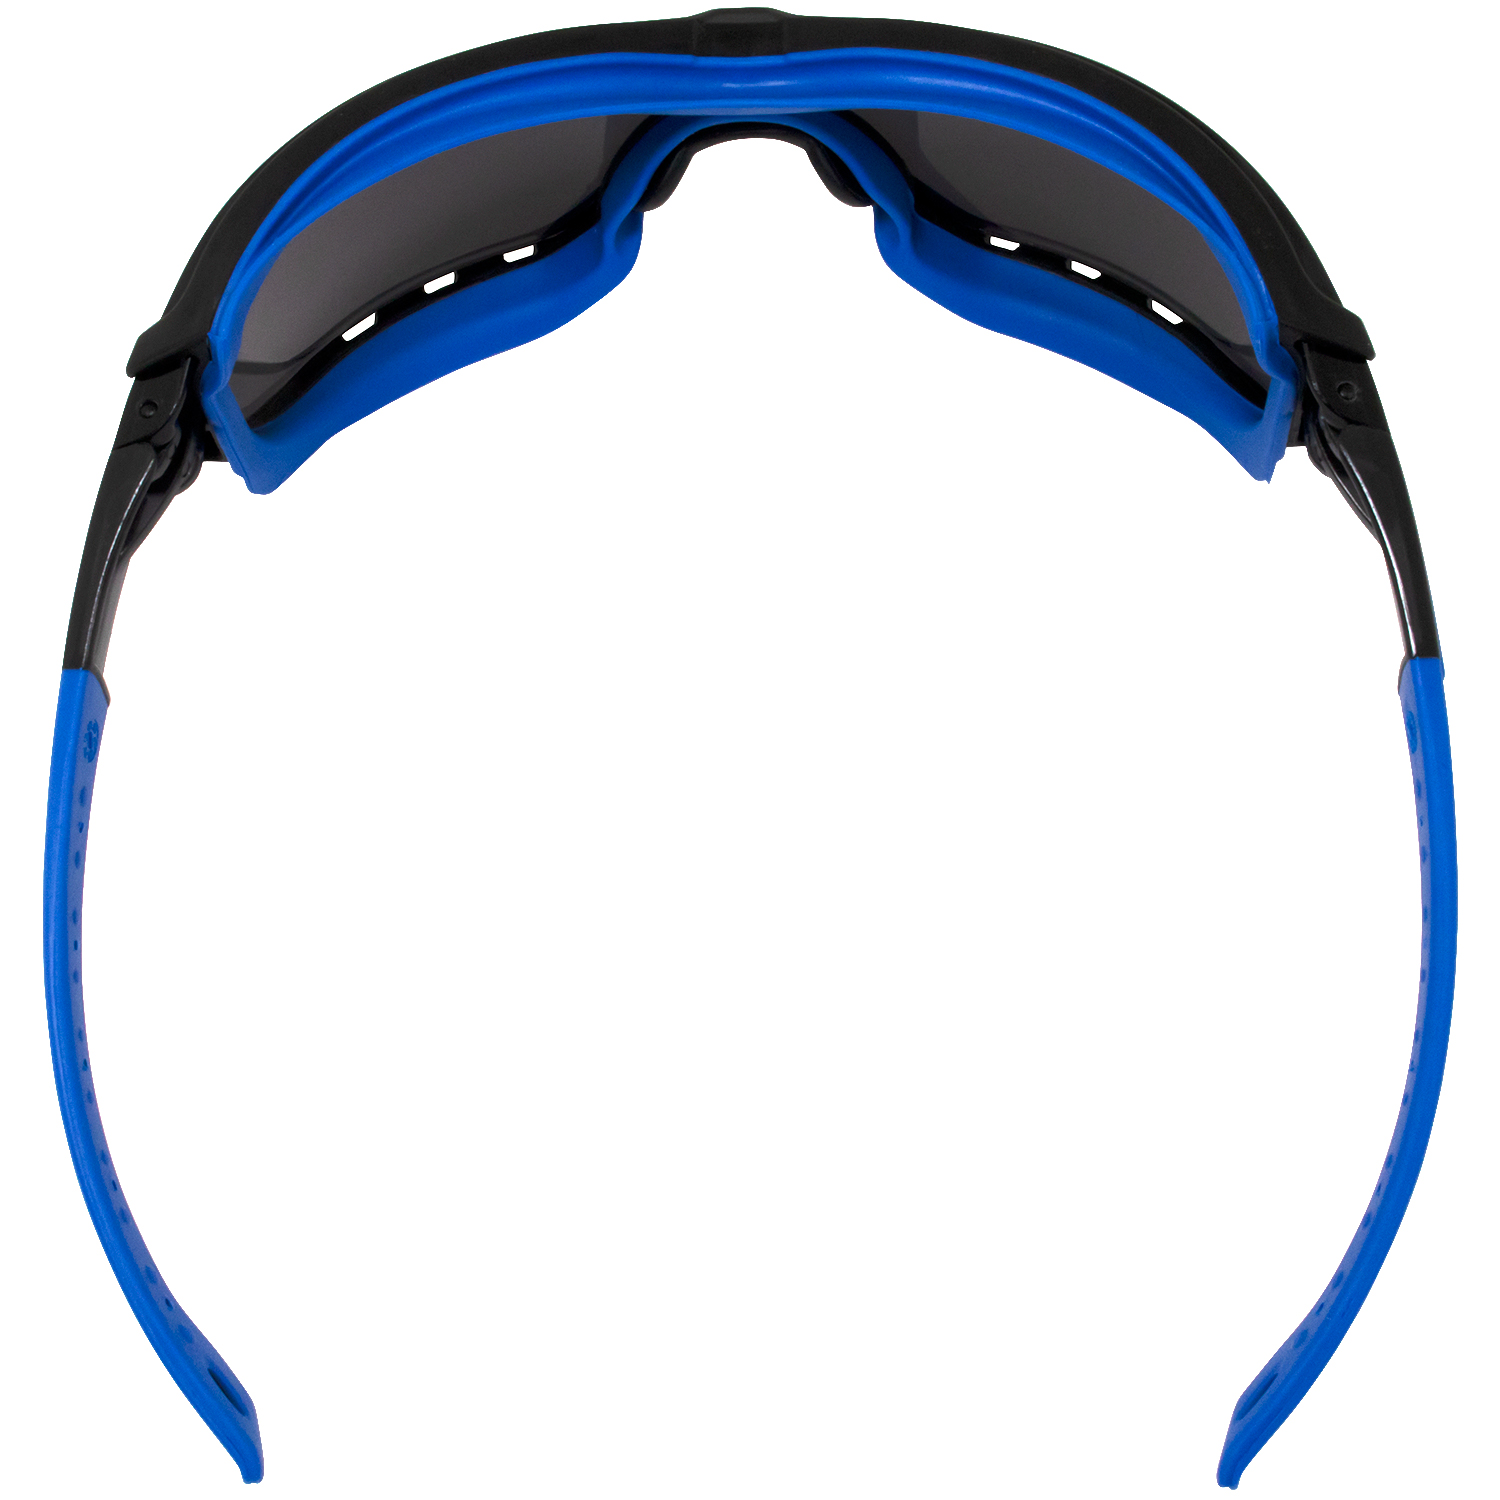 Birdz Eyewear Gasket Safety Padded Motorcycle Sport Sunglasses Blue with Smoke Lens - image 4 of 7